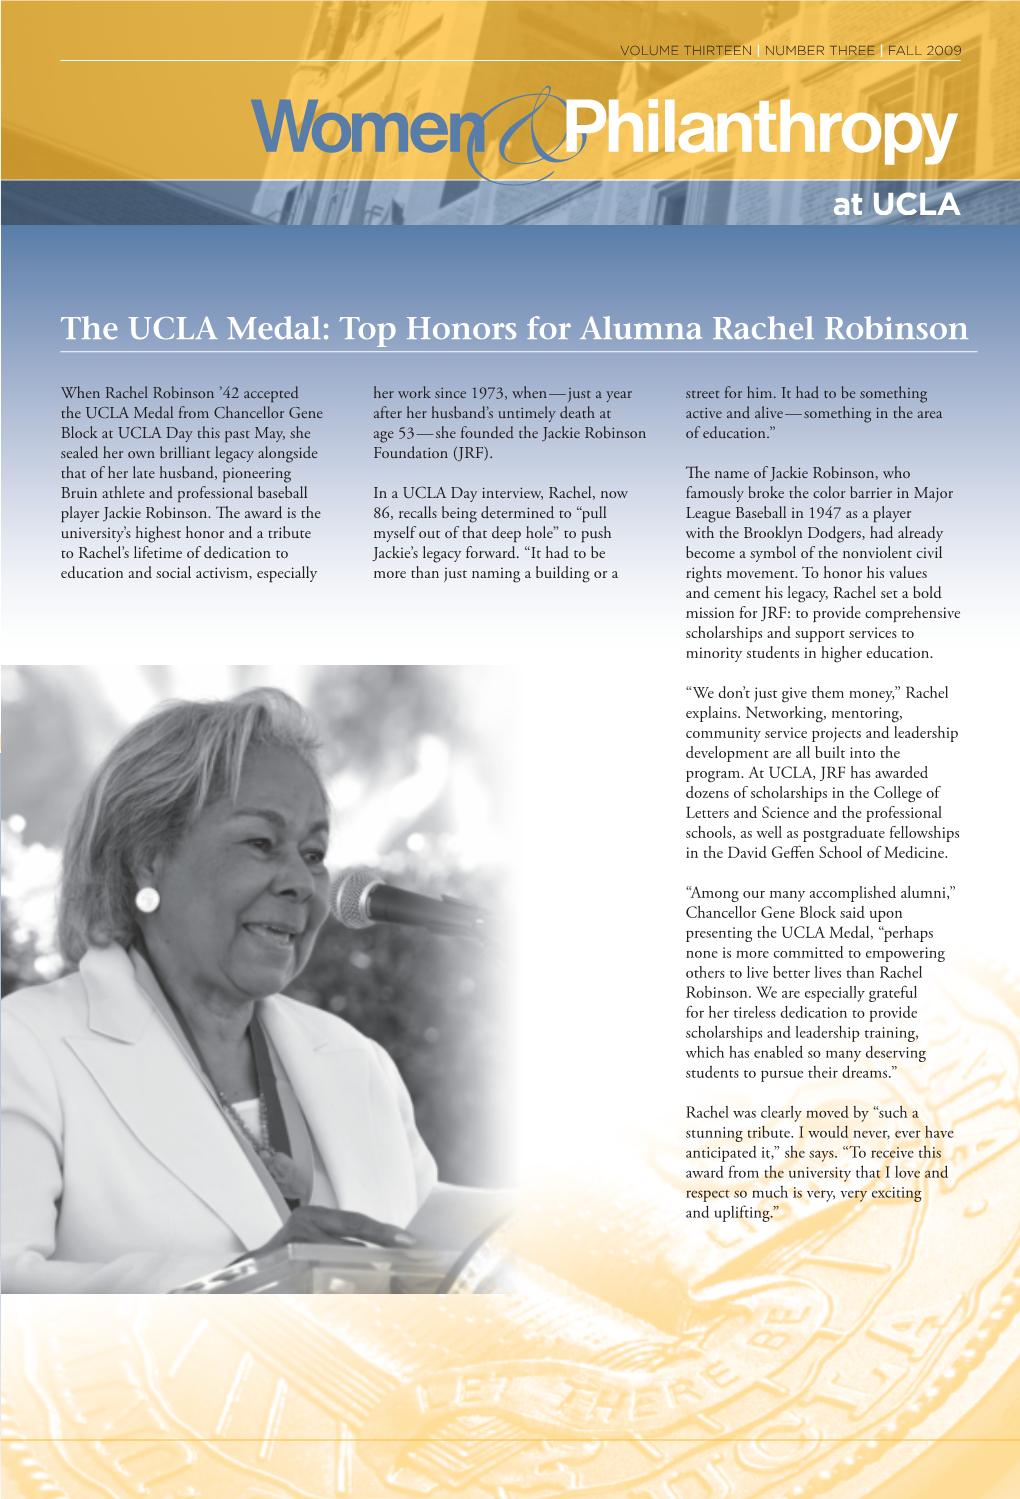 The UCLA Medal: Top Honors for Alumna Rachel Robinson